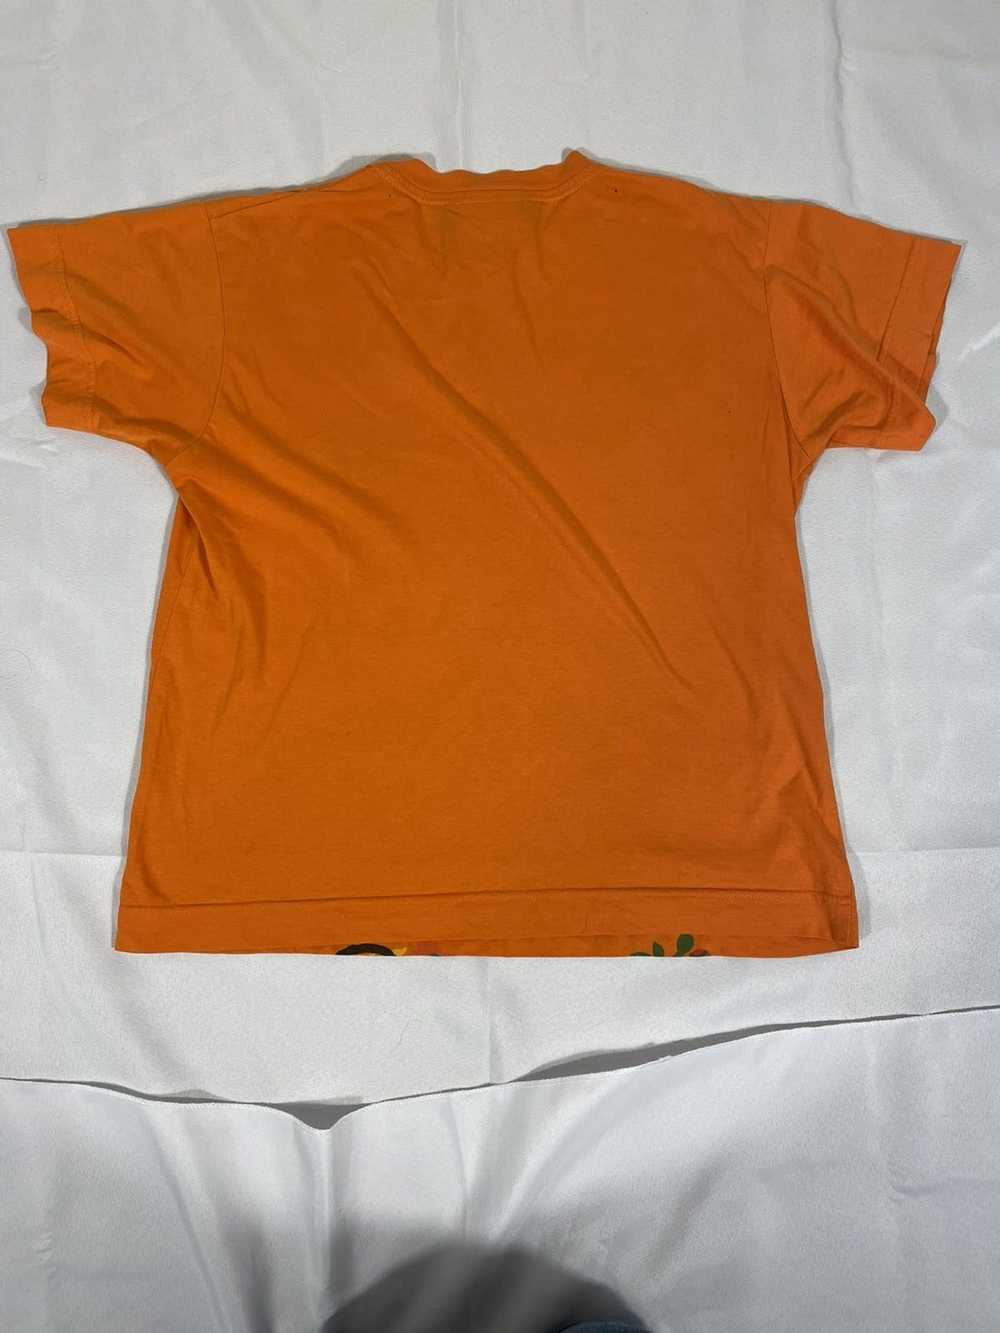 Alberta Ferretti Alberta Ferretti Orange T-Shirt - image 2